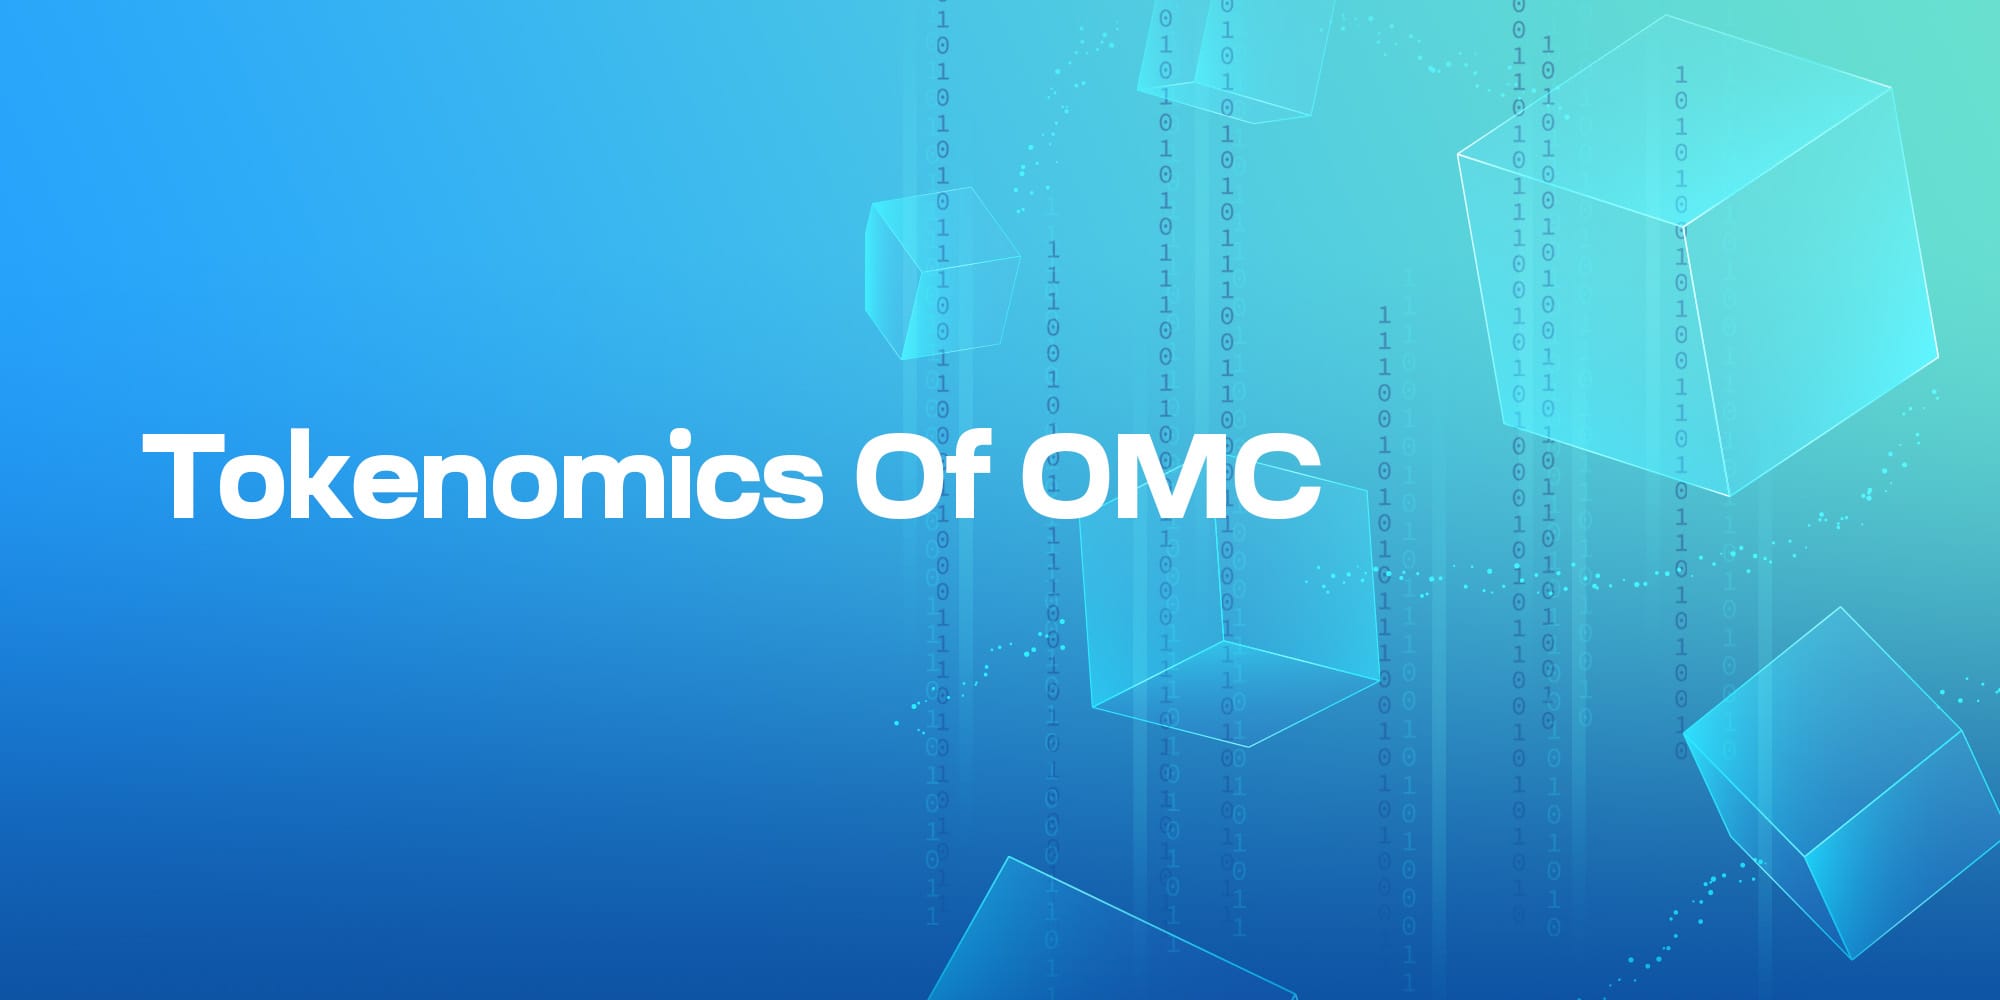 Tokenomics Of OMC